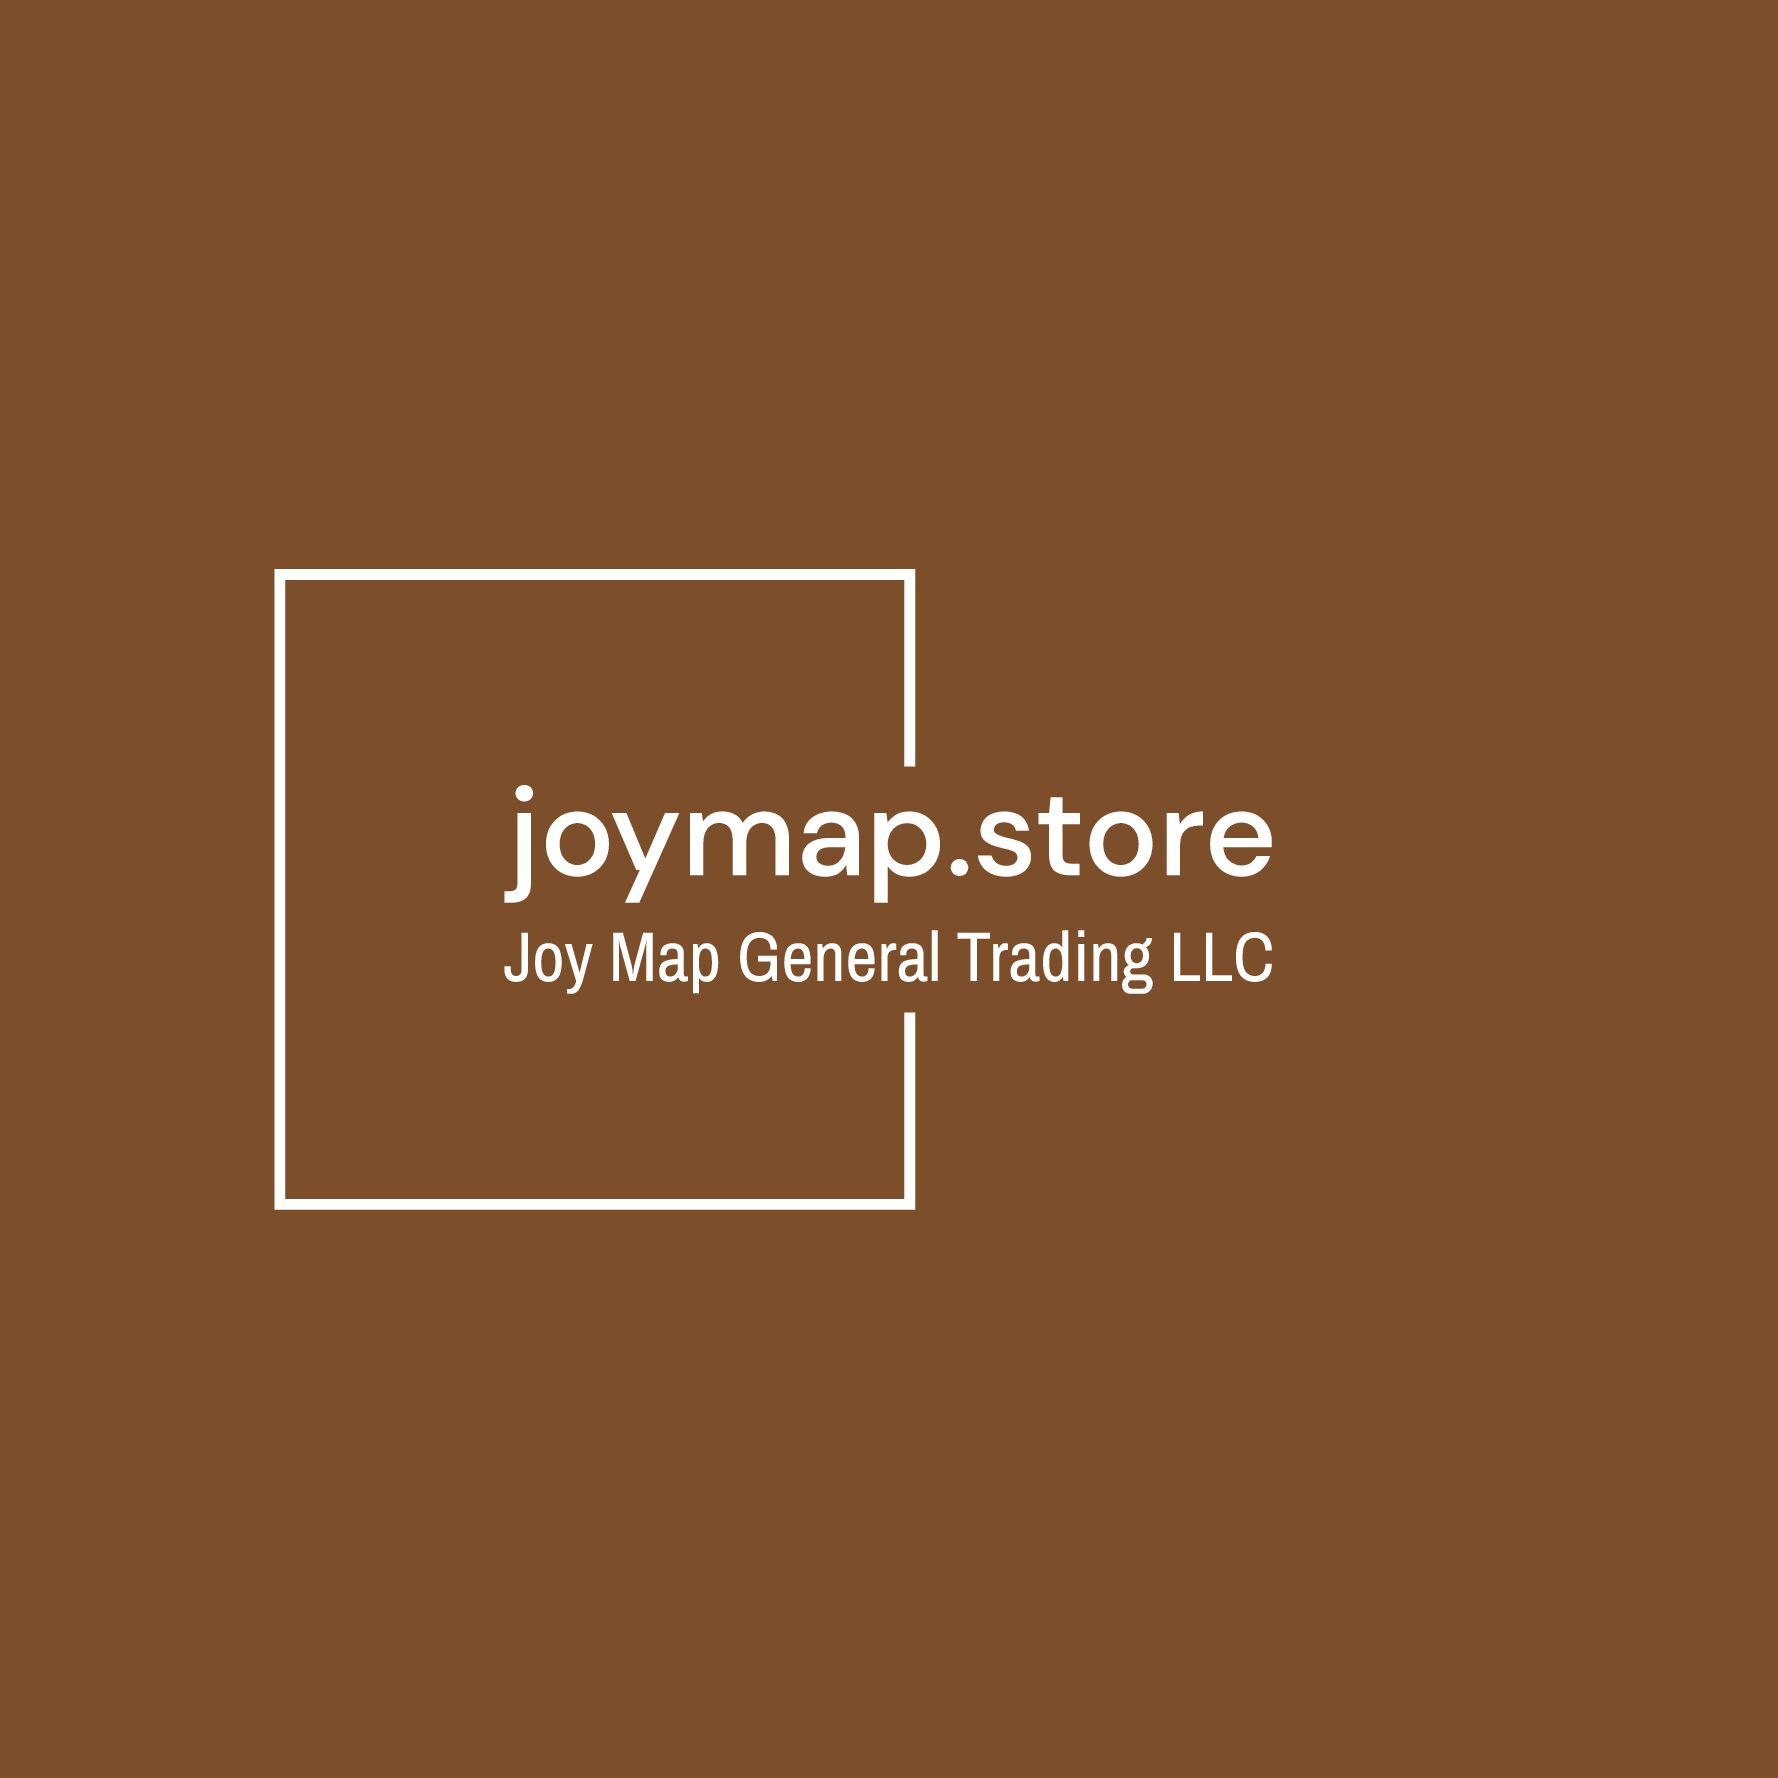 Joy Map General Trading LLC